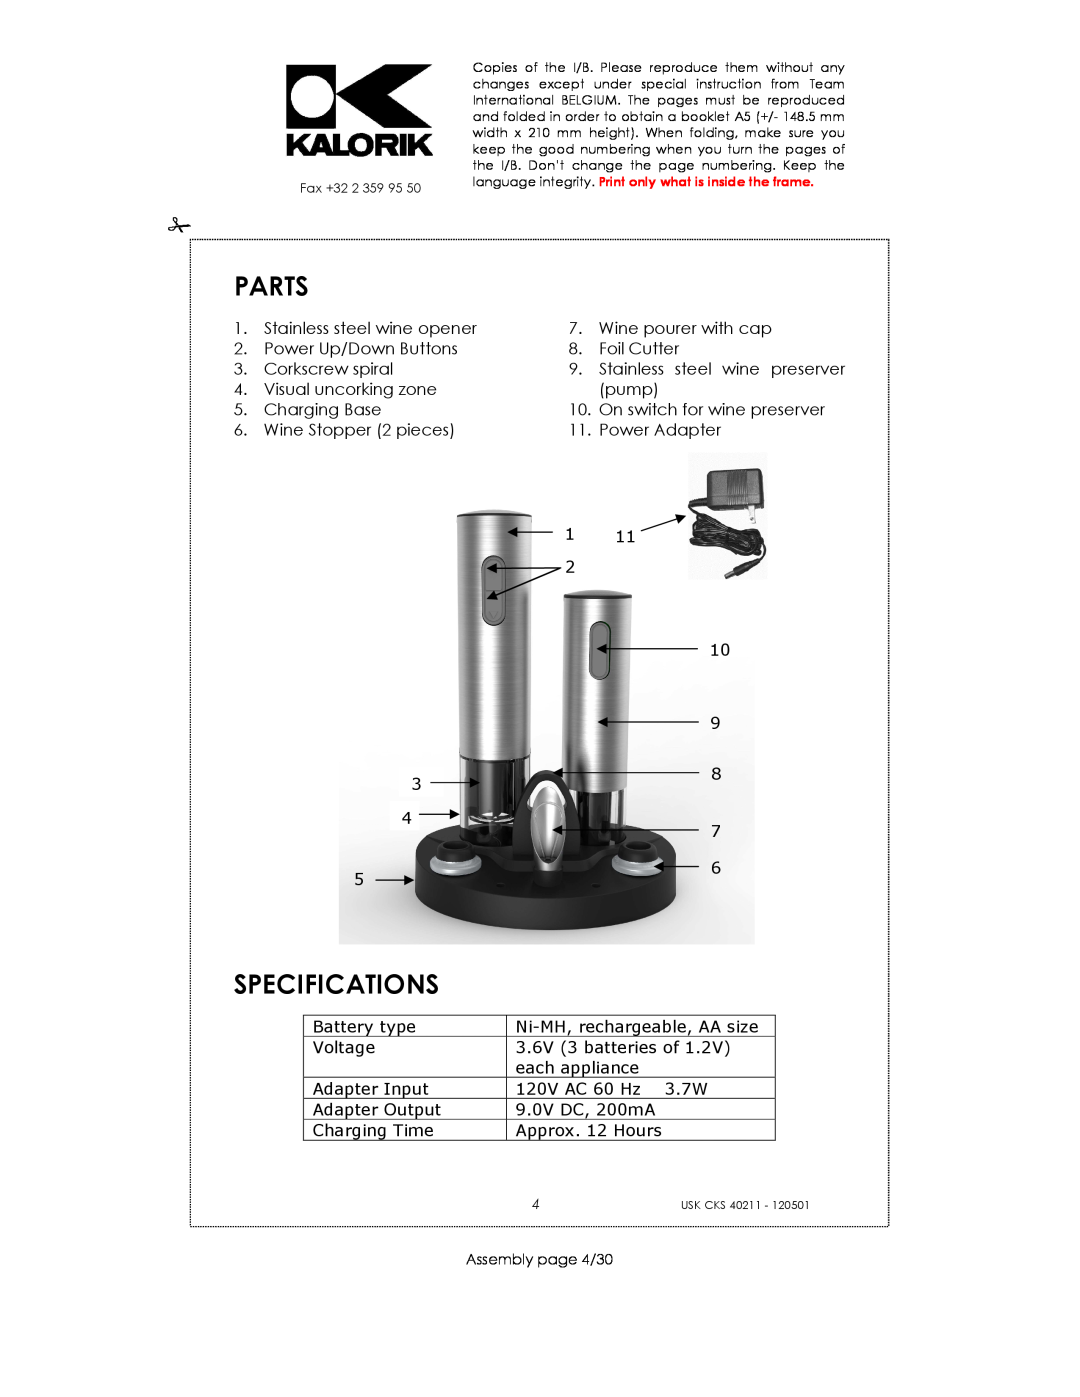 Kalorik CKS 40211 manual Parts, Specifications 